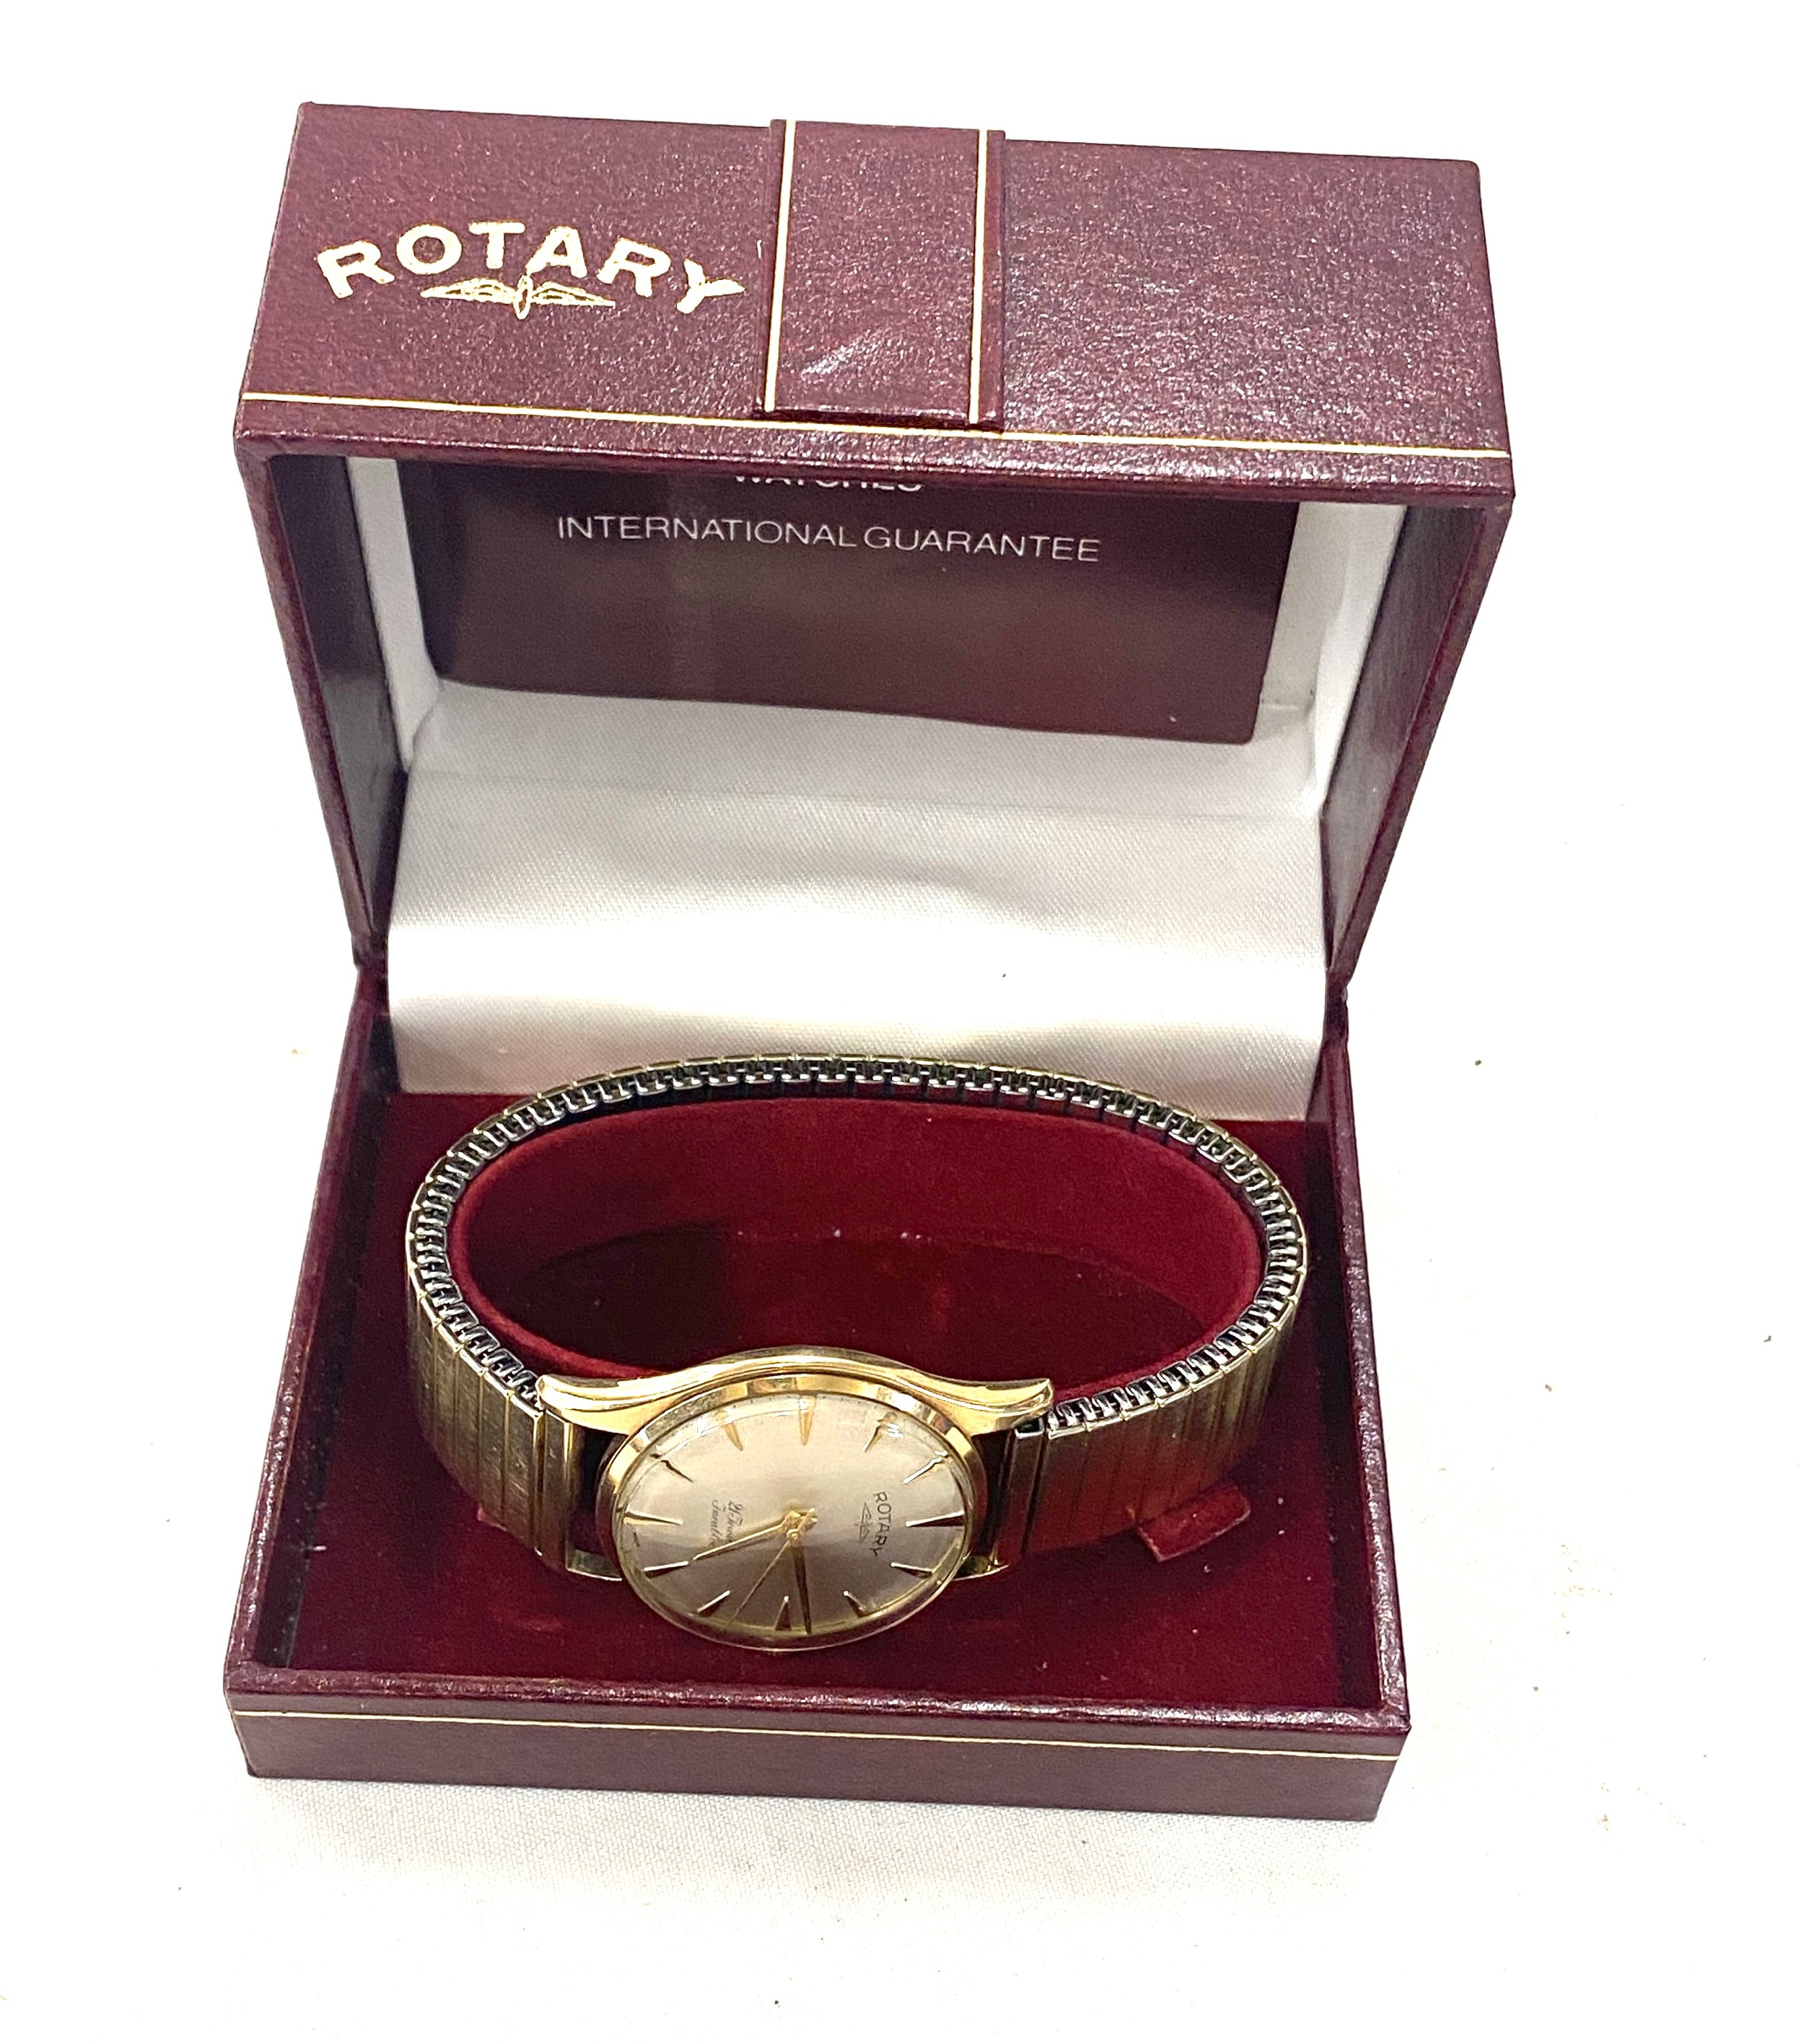 Gents 9ct gold Rotary 21 jewel presentation wristwatch, working order, presentation inscription to